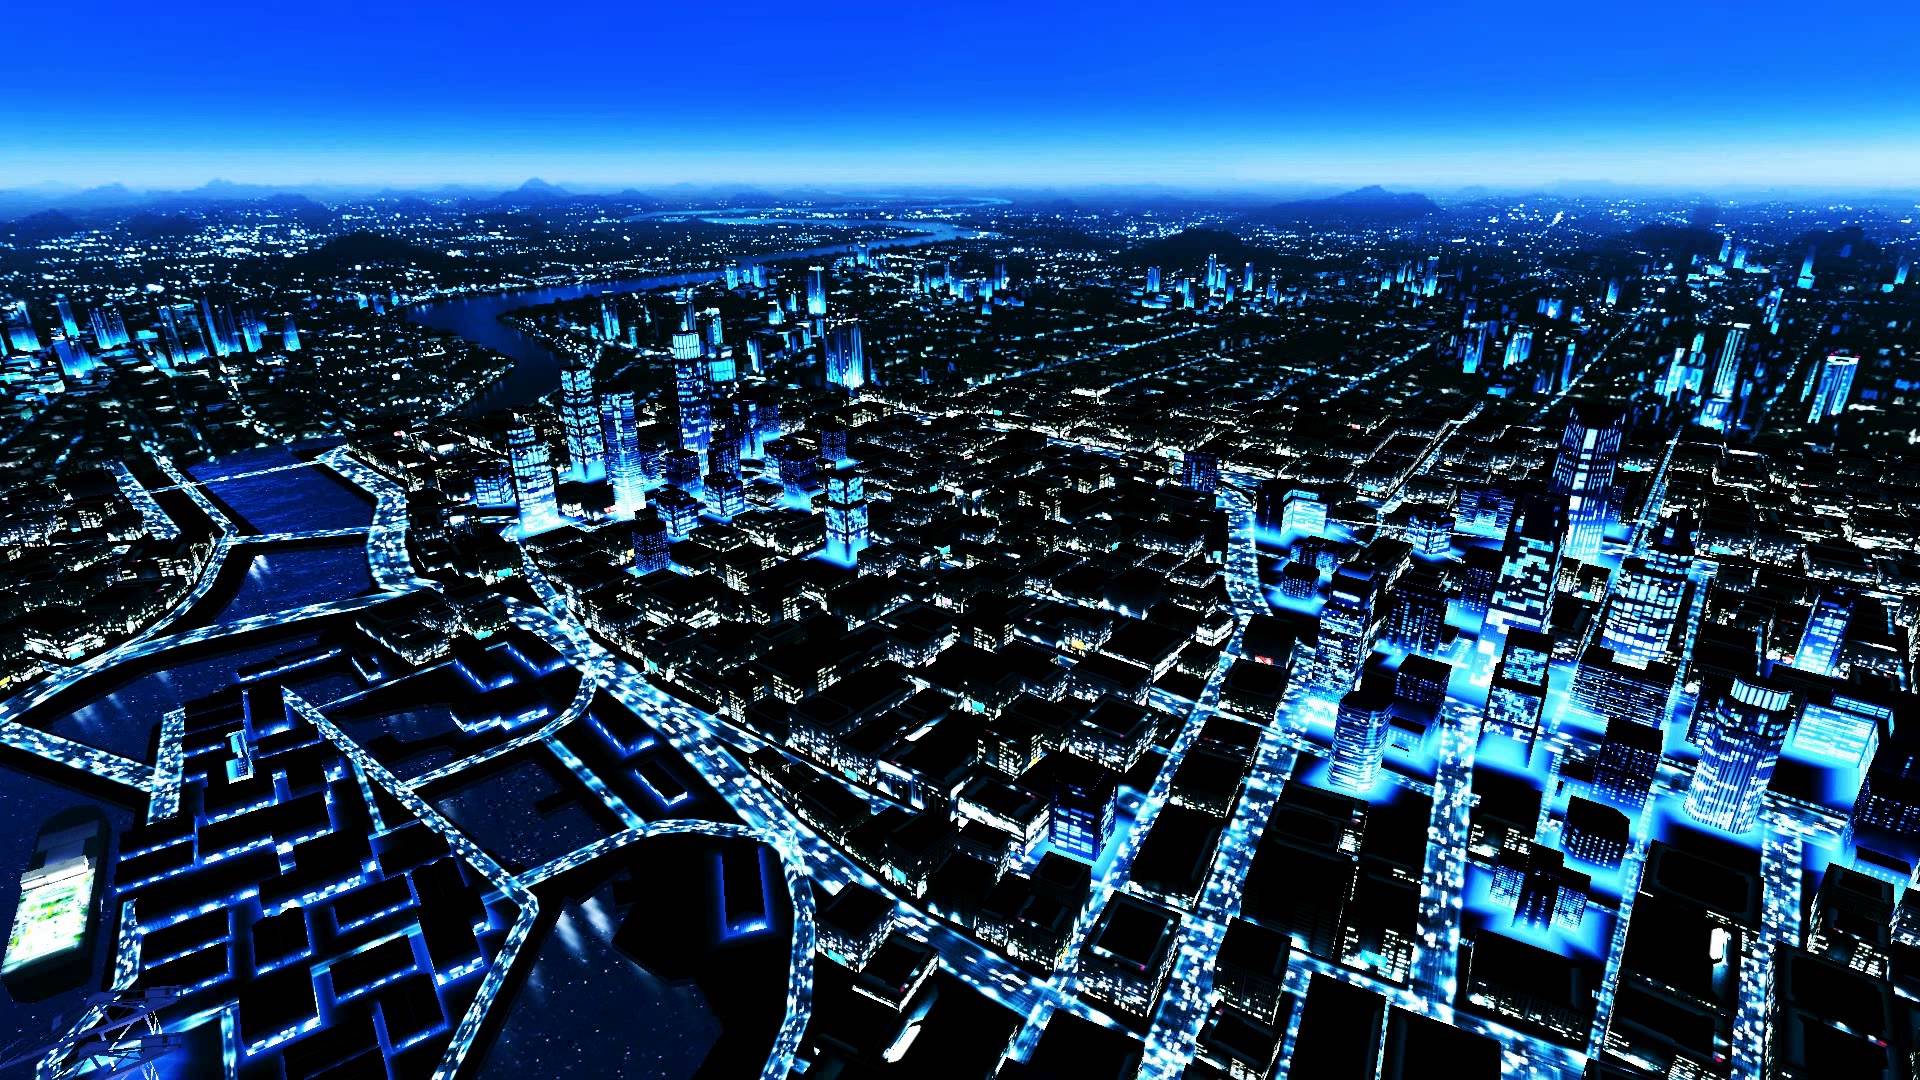 Edge Dreamscene Live Wallpaper Night Skyline 1080p